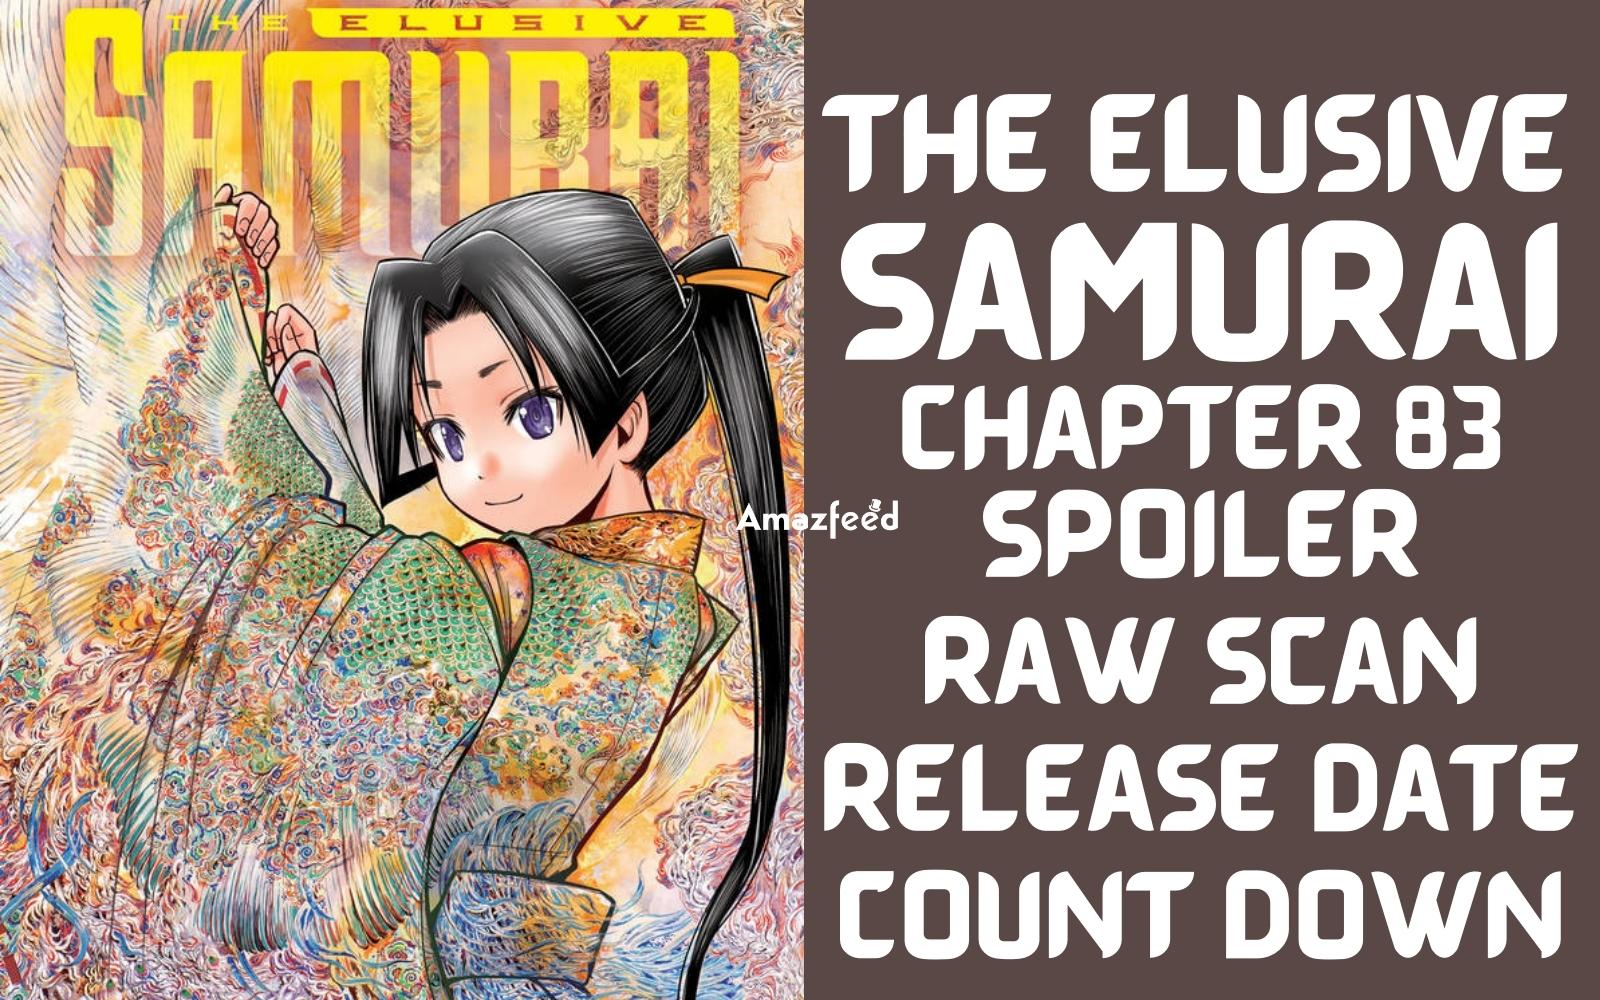 The Elusive Samurai Chapter 83 Spoiler, Release Date, Raw Scan, CountDown